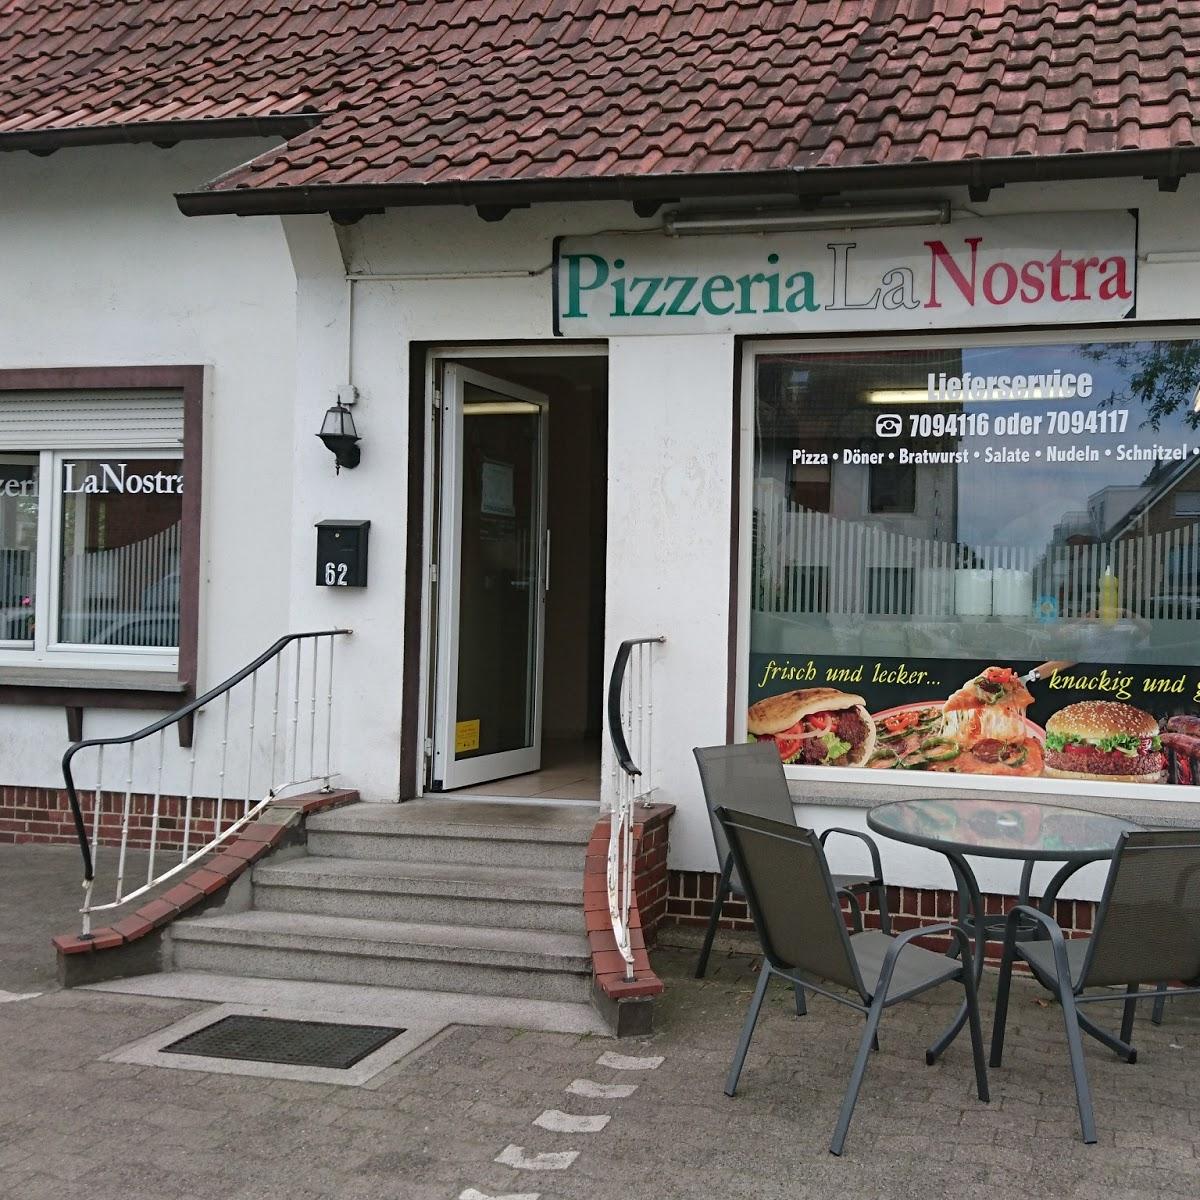 Restaurant "Pizzeria La Nostra" in Verl